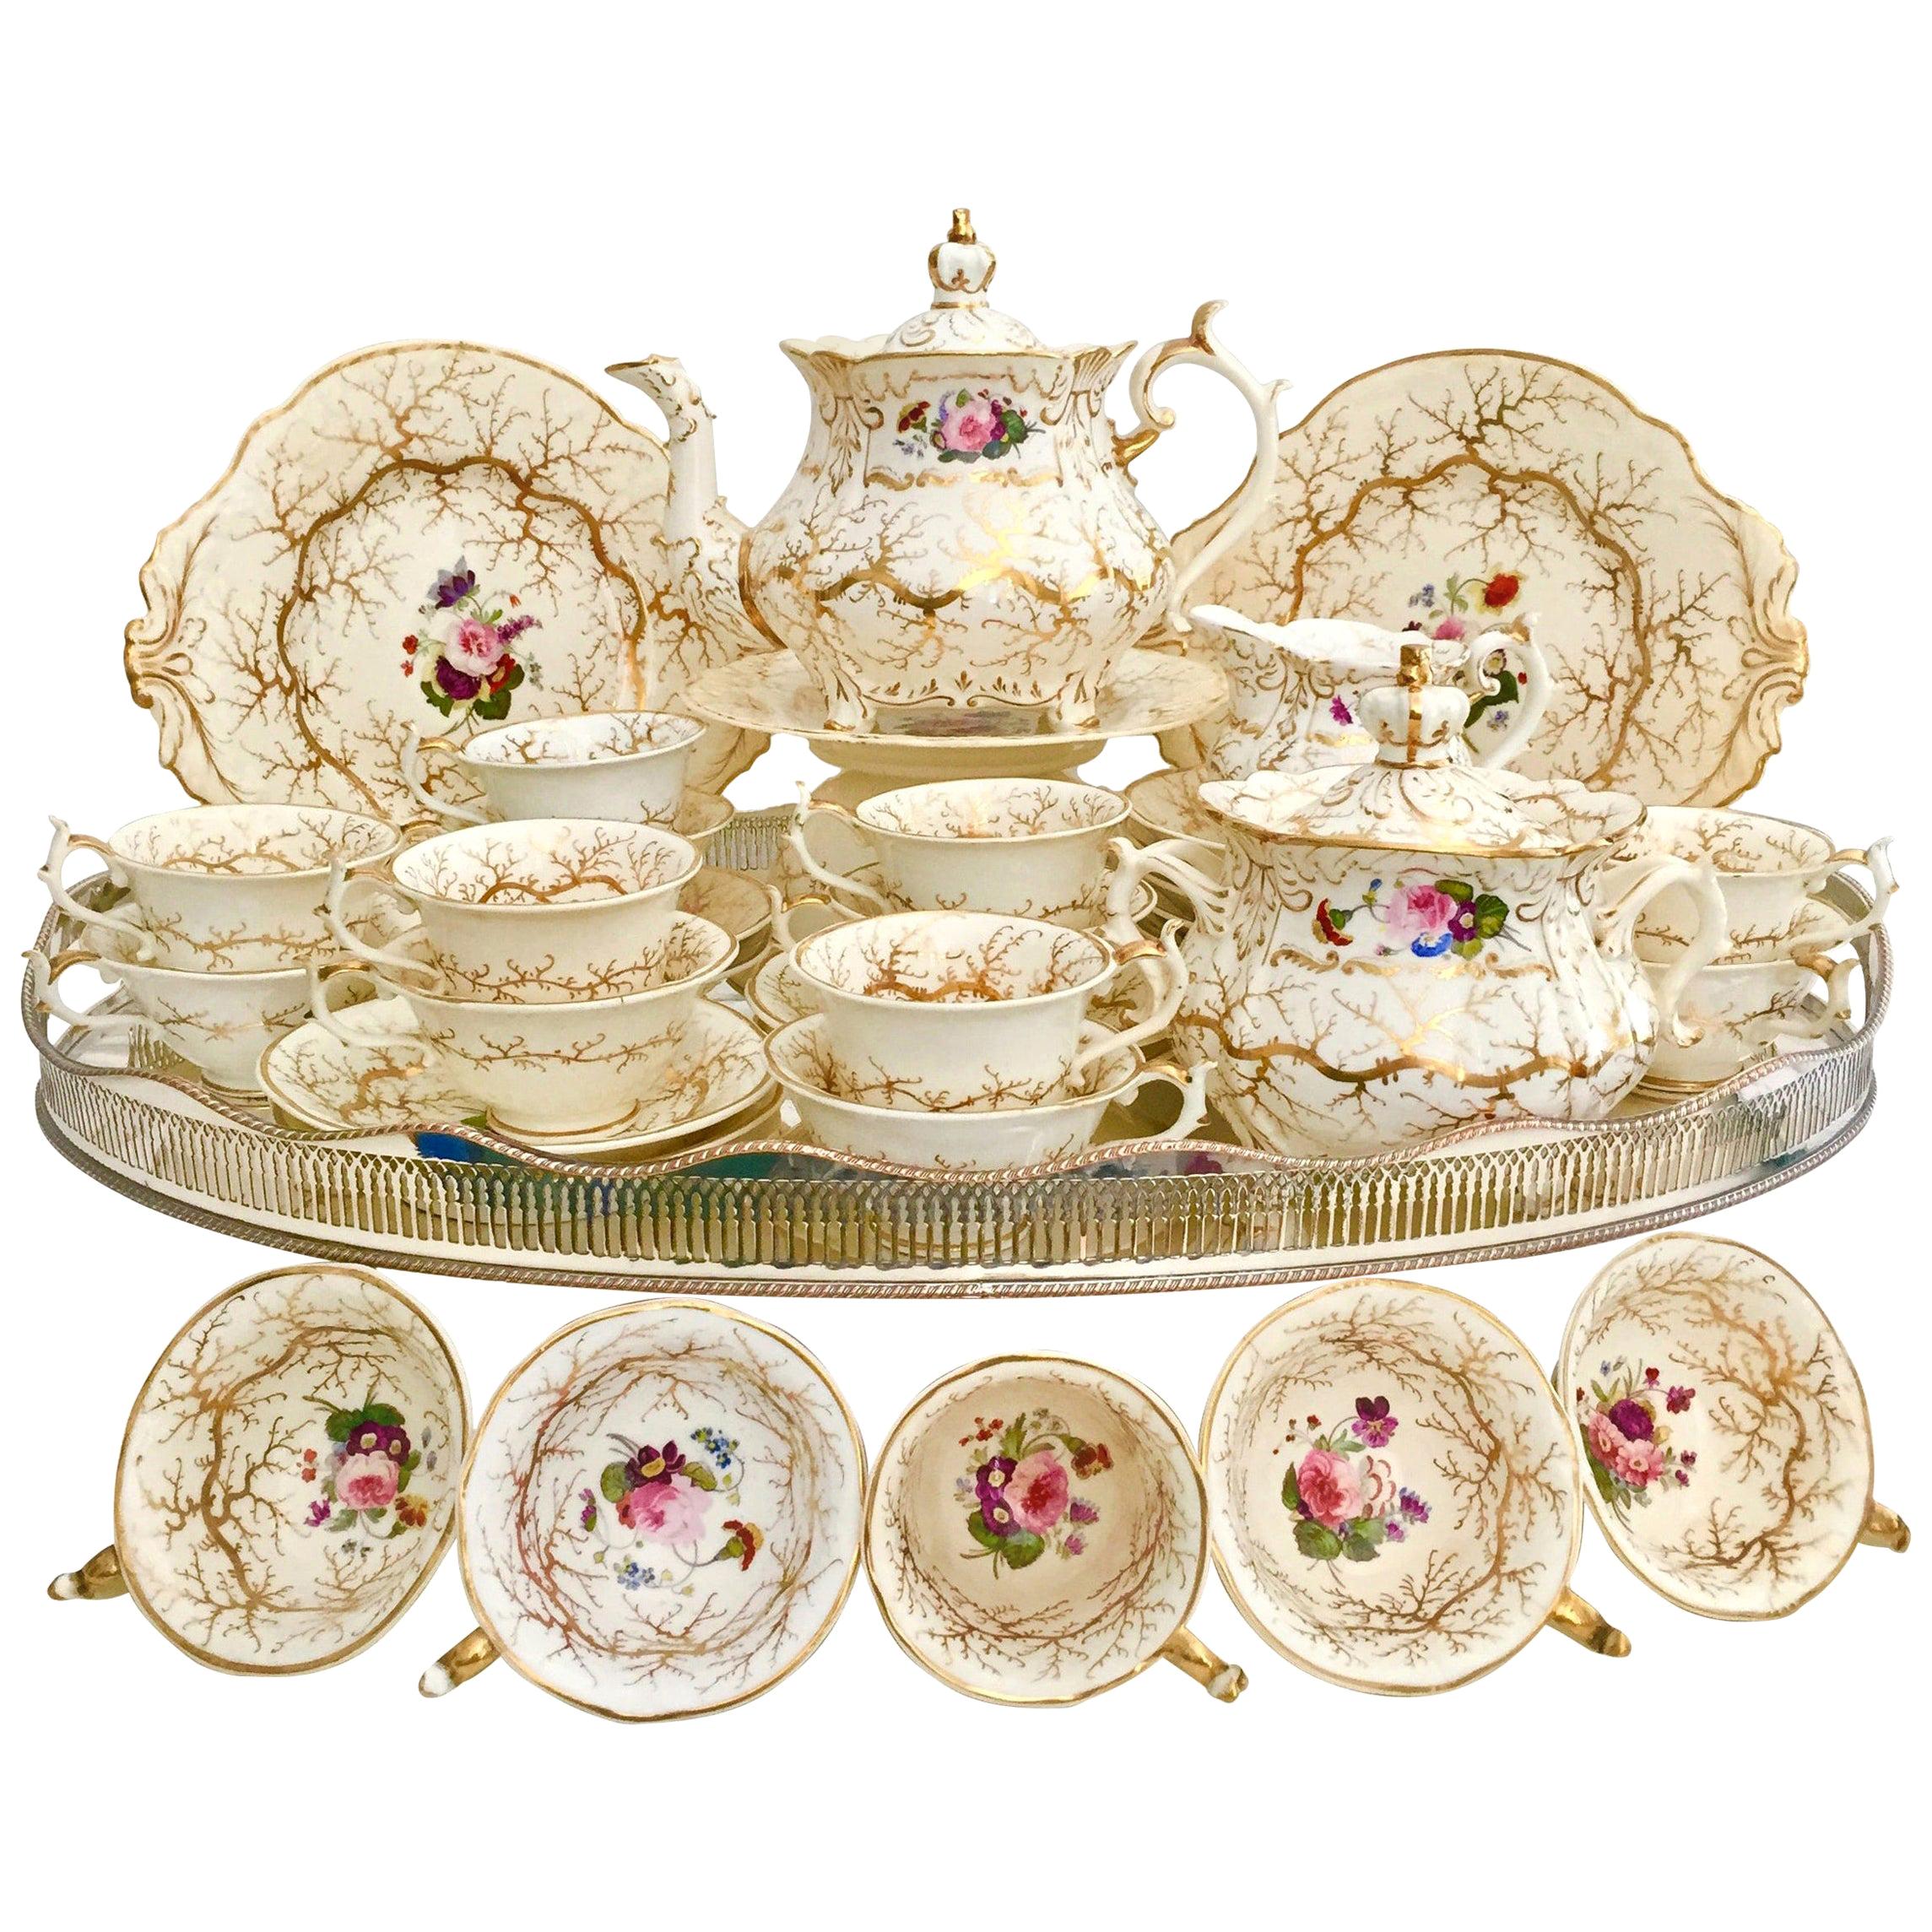 Rockingham Porcelain Tea Service, Cream, Gilt and Flowers, Rococo Revival, 1832